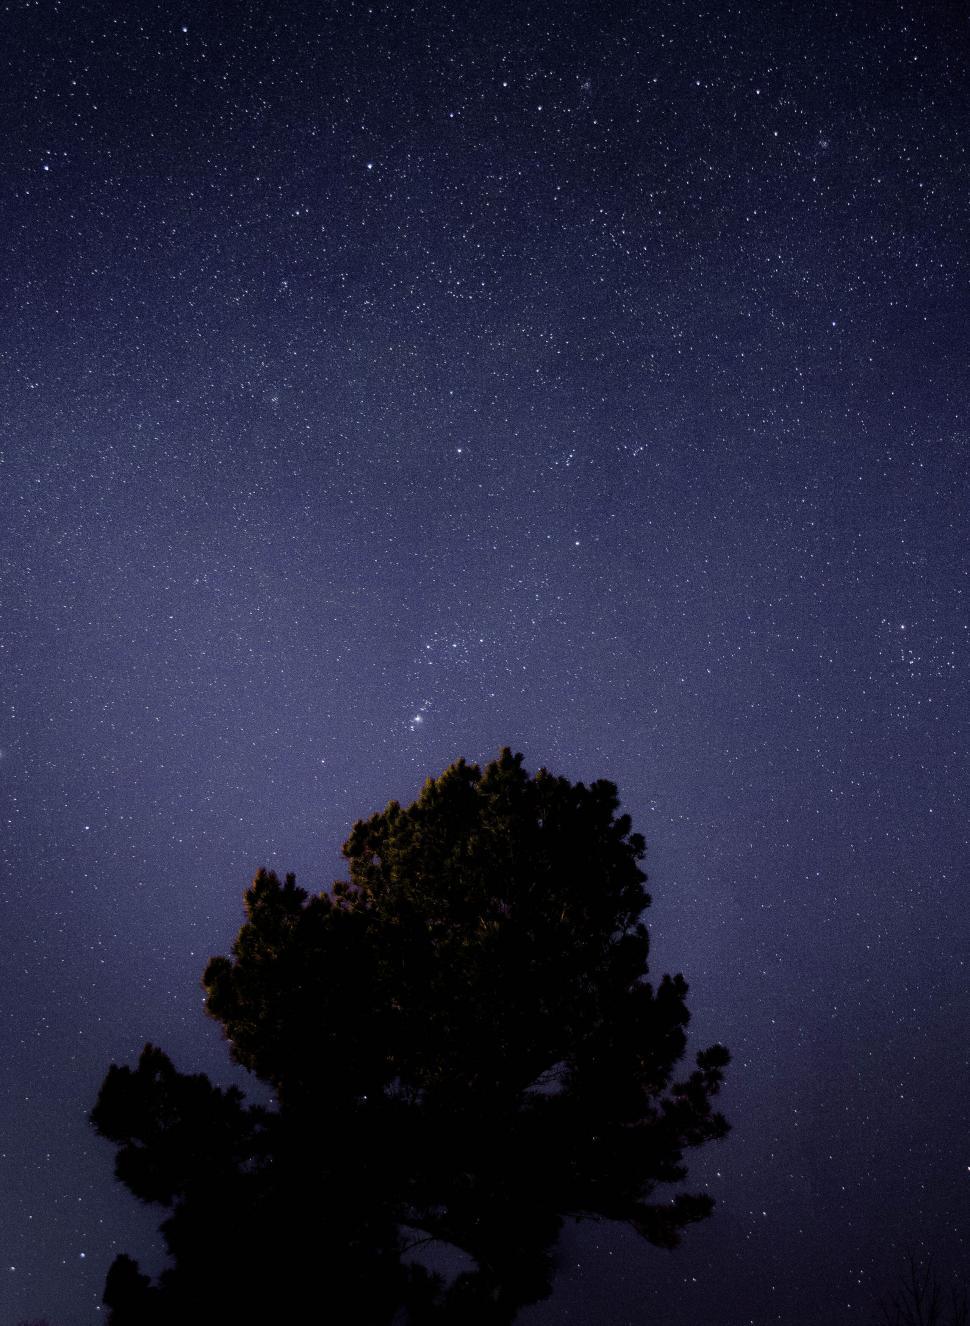 Free Image of Starry night sky above silhouette tree 